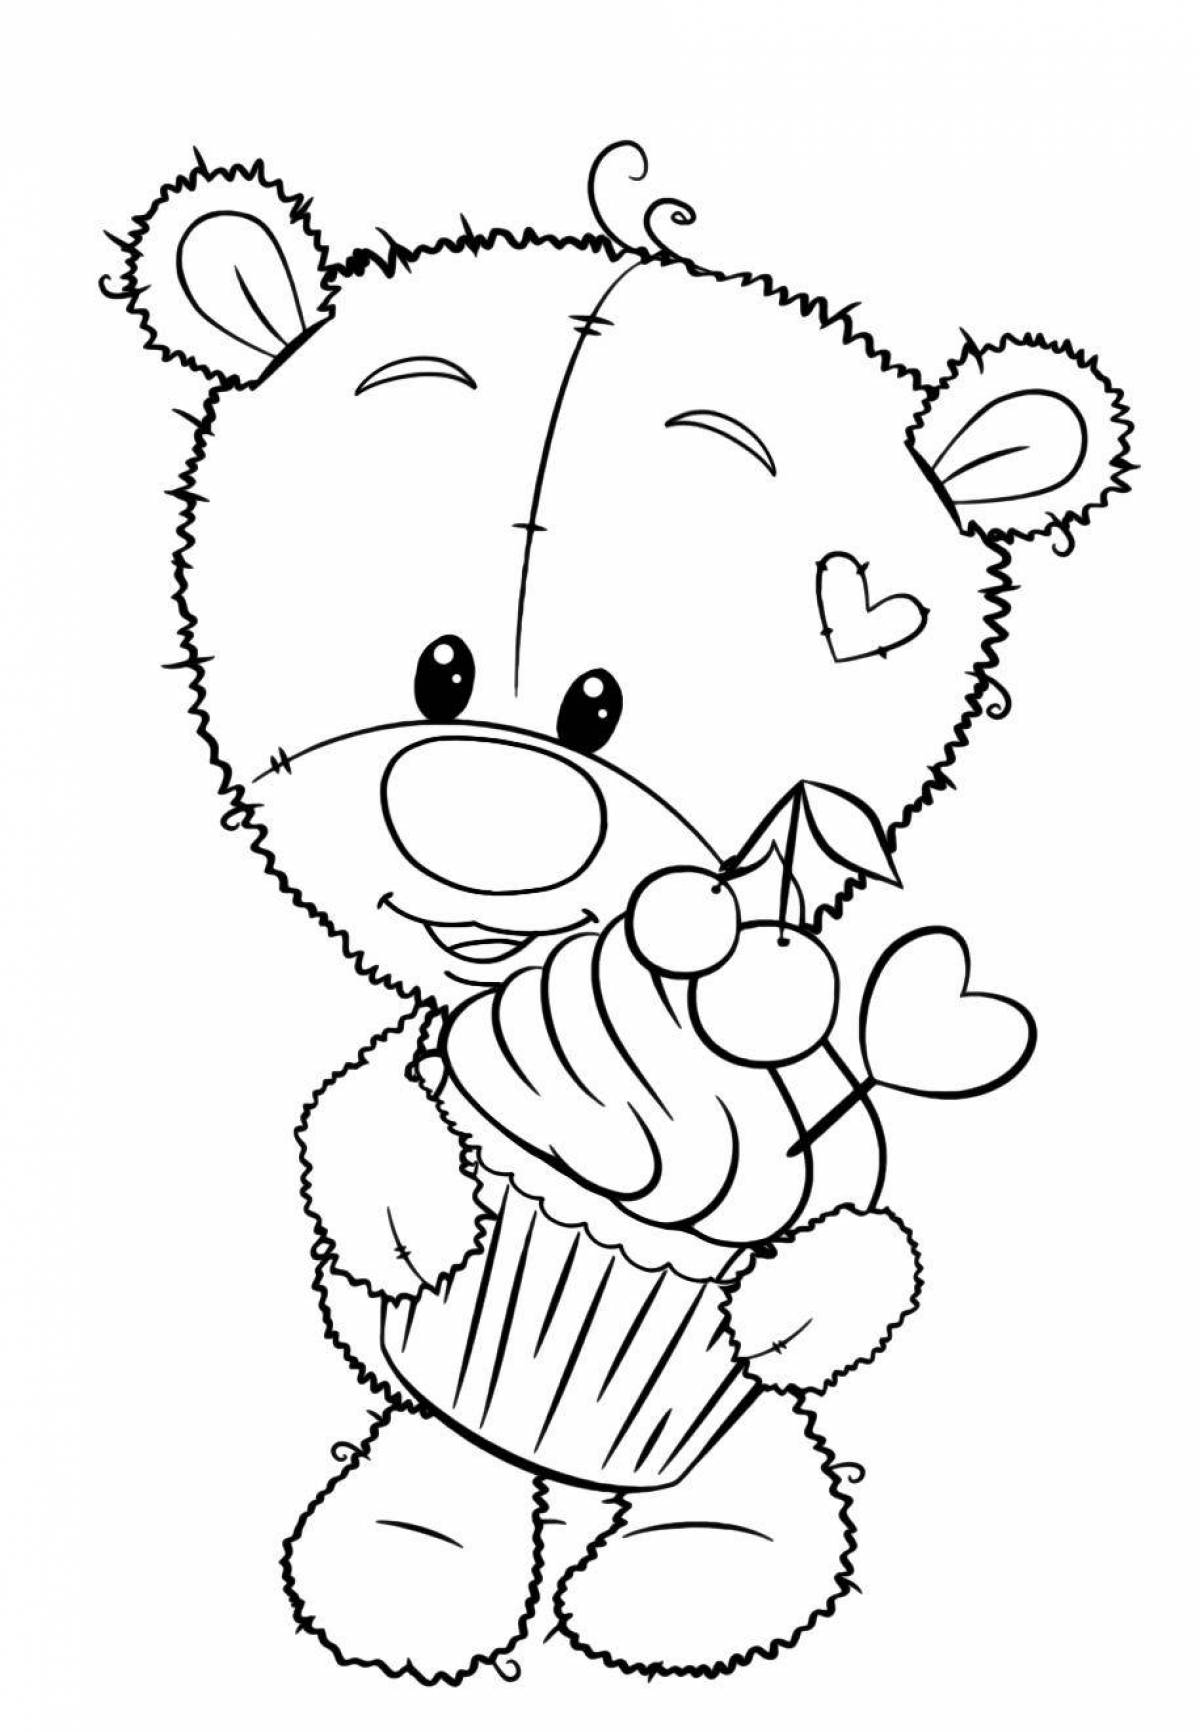 Children's coloring teddy bear